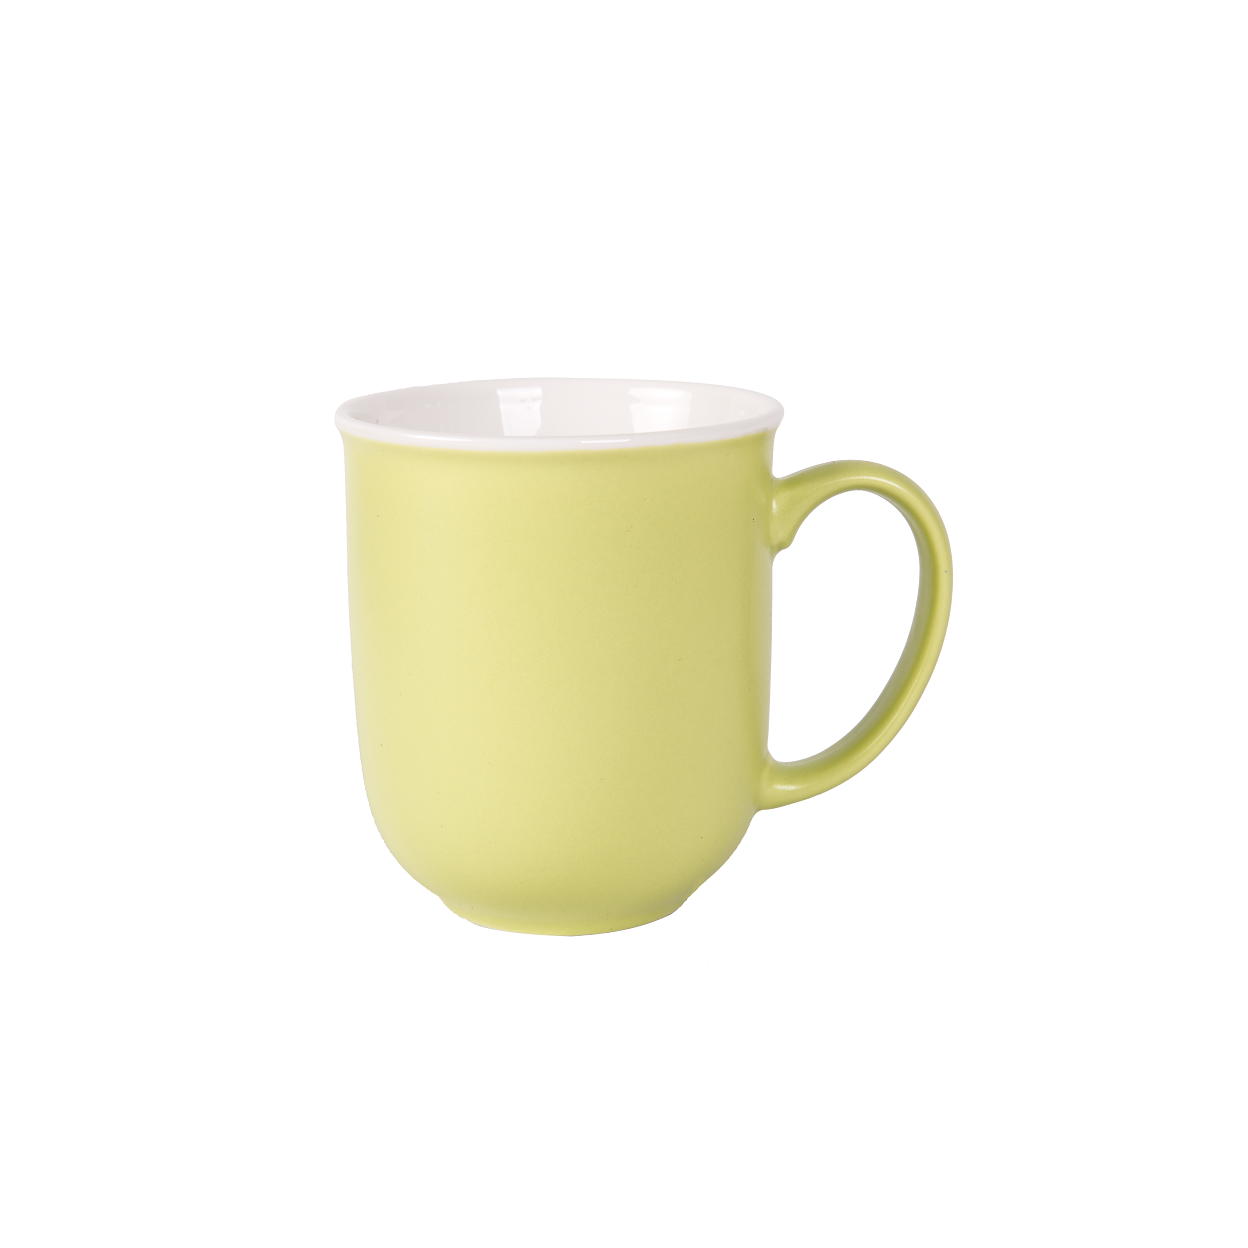 SMARTCOOK ceramic mug 2020805